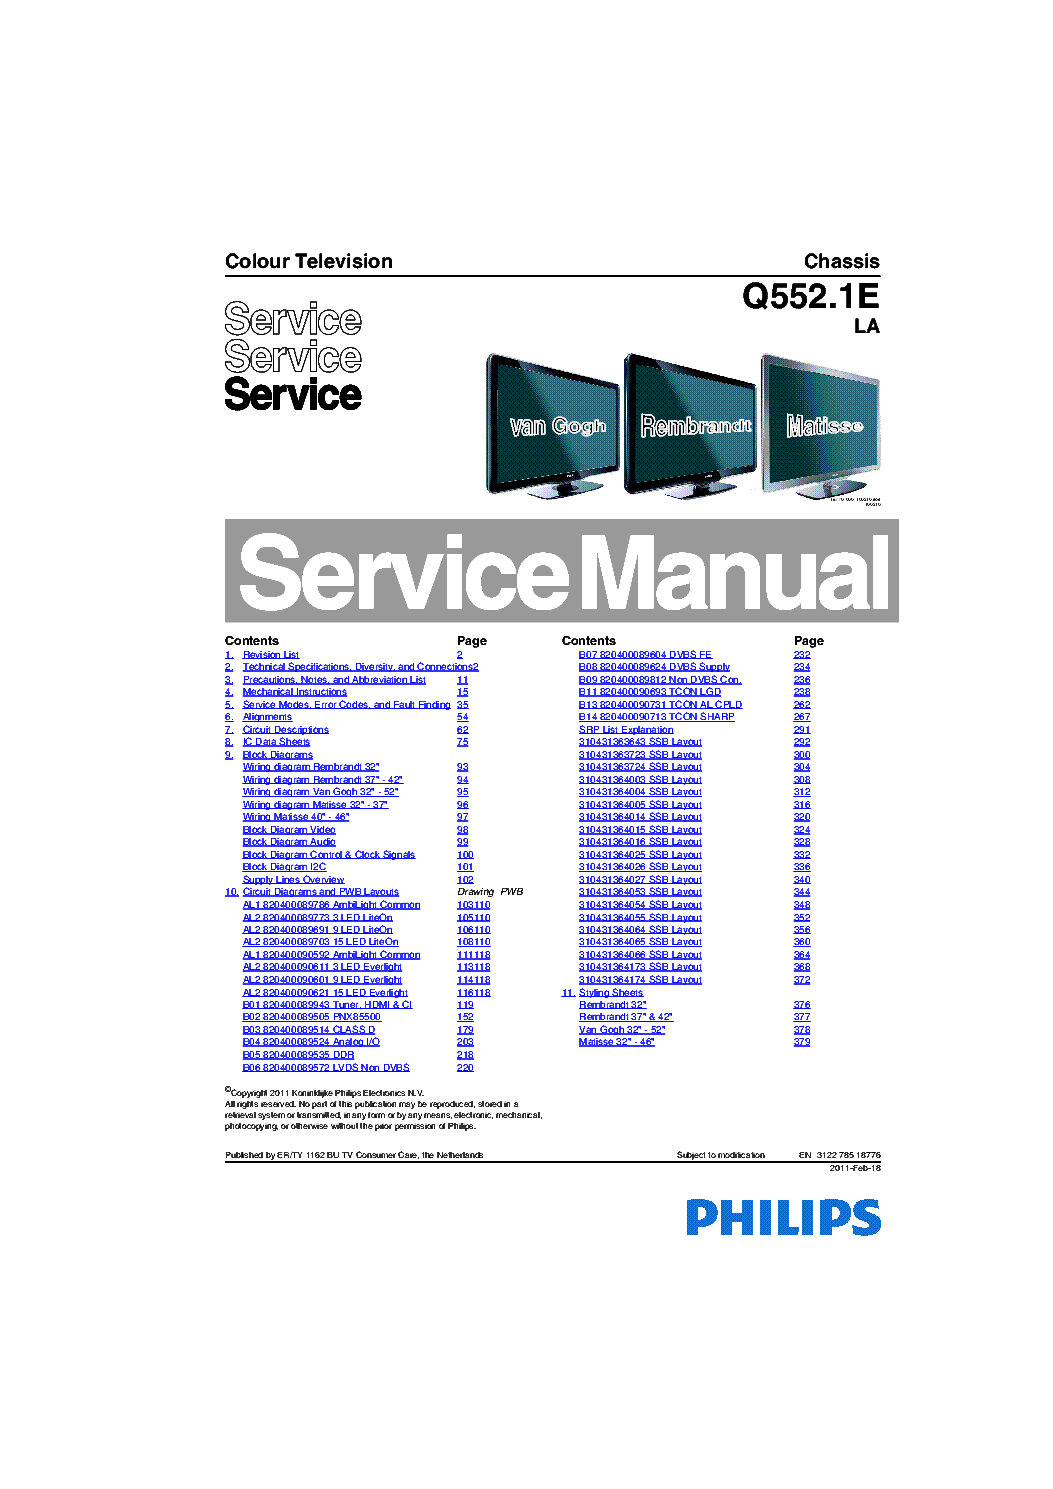 PHILIPS Q552.1ELA 18776 SM service manual (1st page)